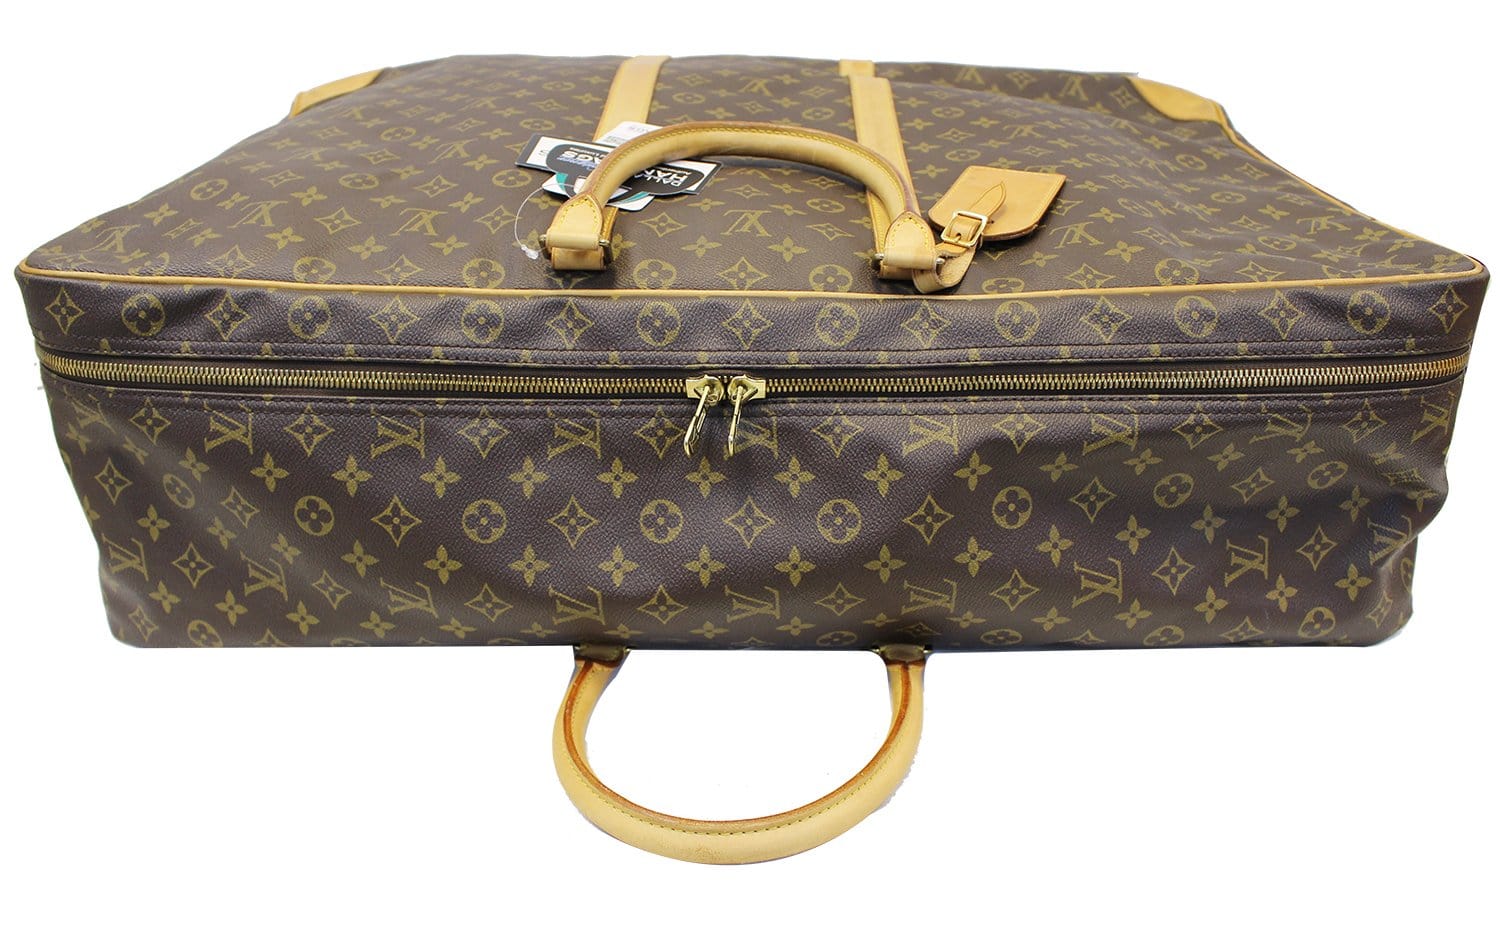 Louis Vuitton Monogram Canvas Sirius 70 Soft Sided Suitcase